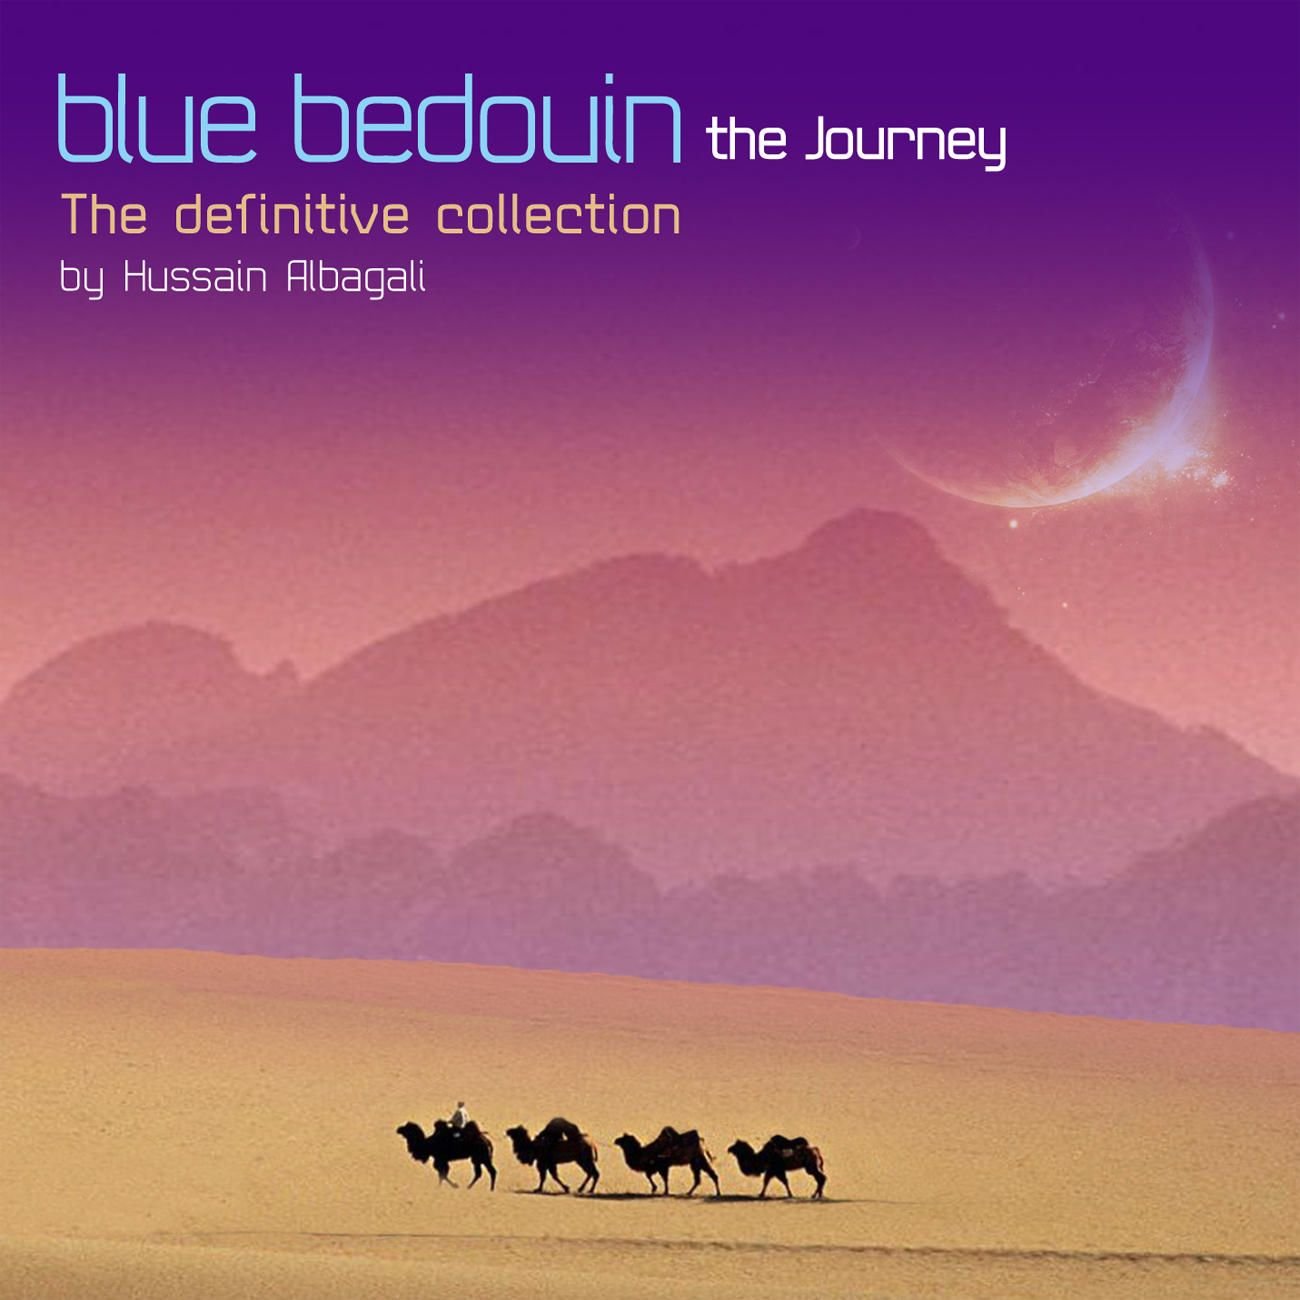 Have good journey. Альбом Journey. Bedouin Music. All India Radio альбом.